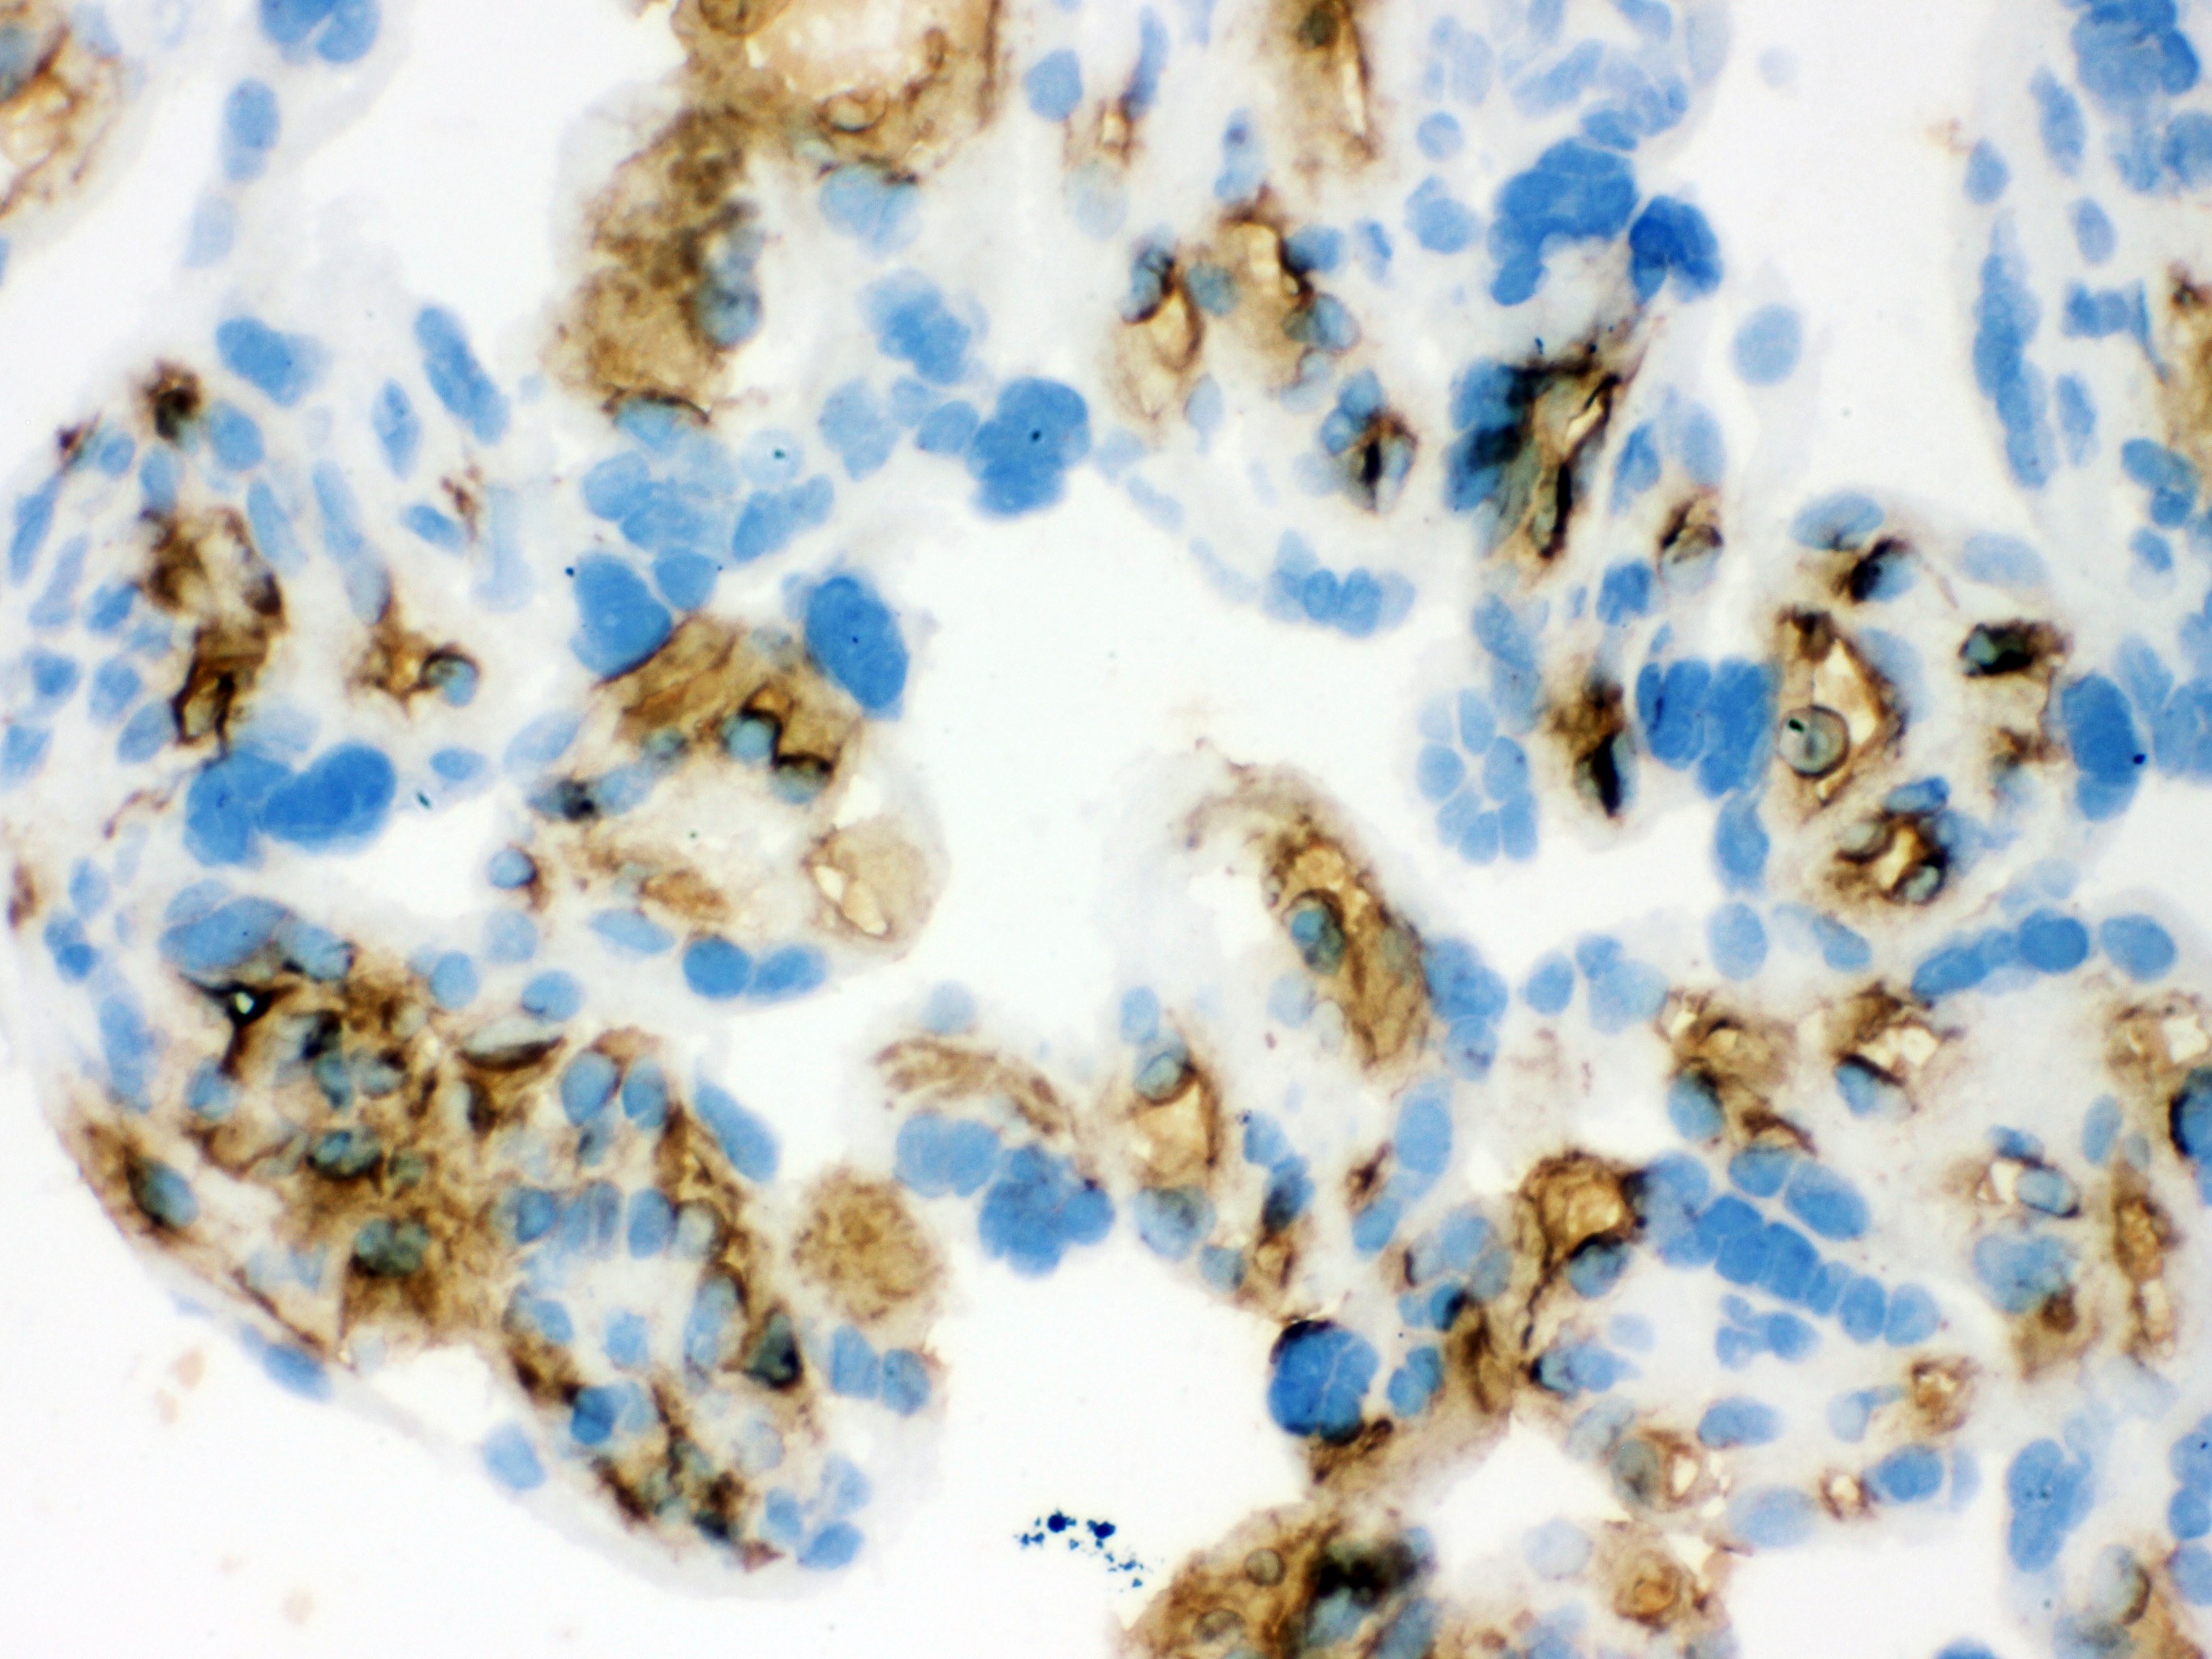 BAND 3 Antibody (OABB01920) in Human Placenta Tissue using Immunohistochemistry